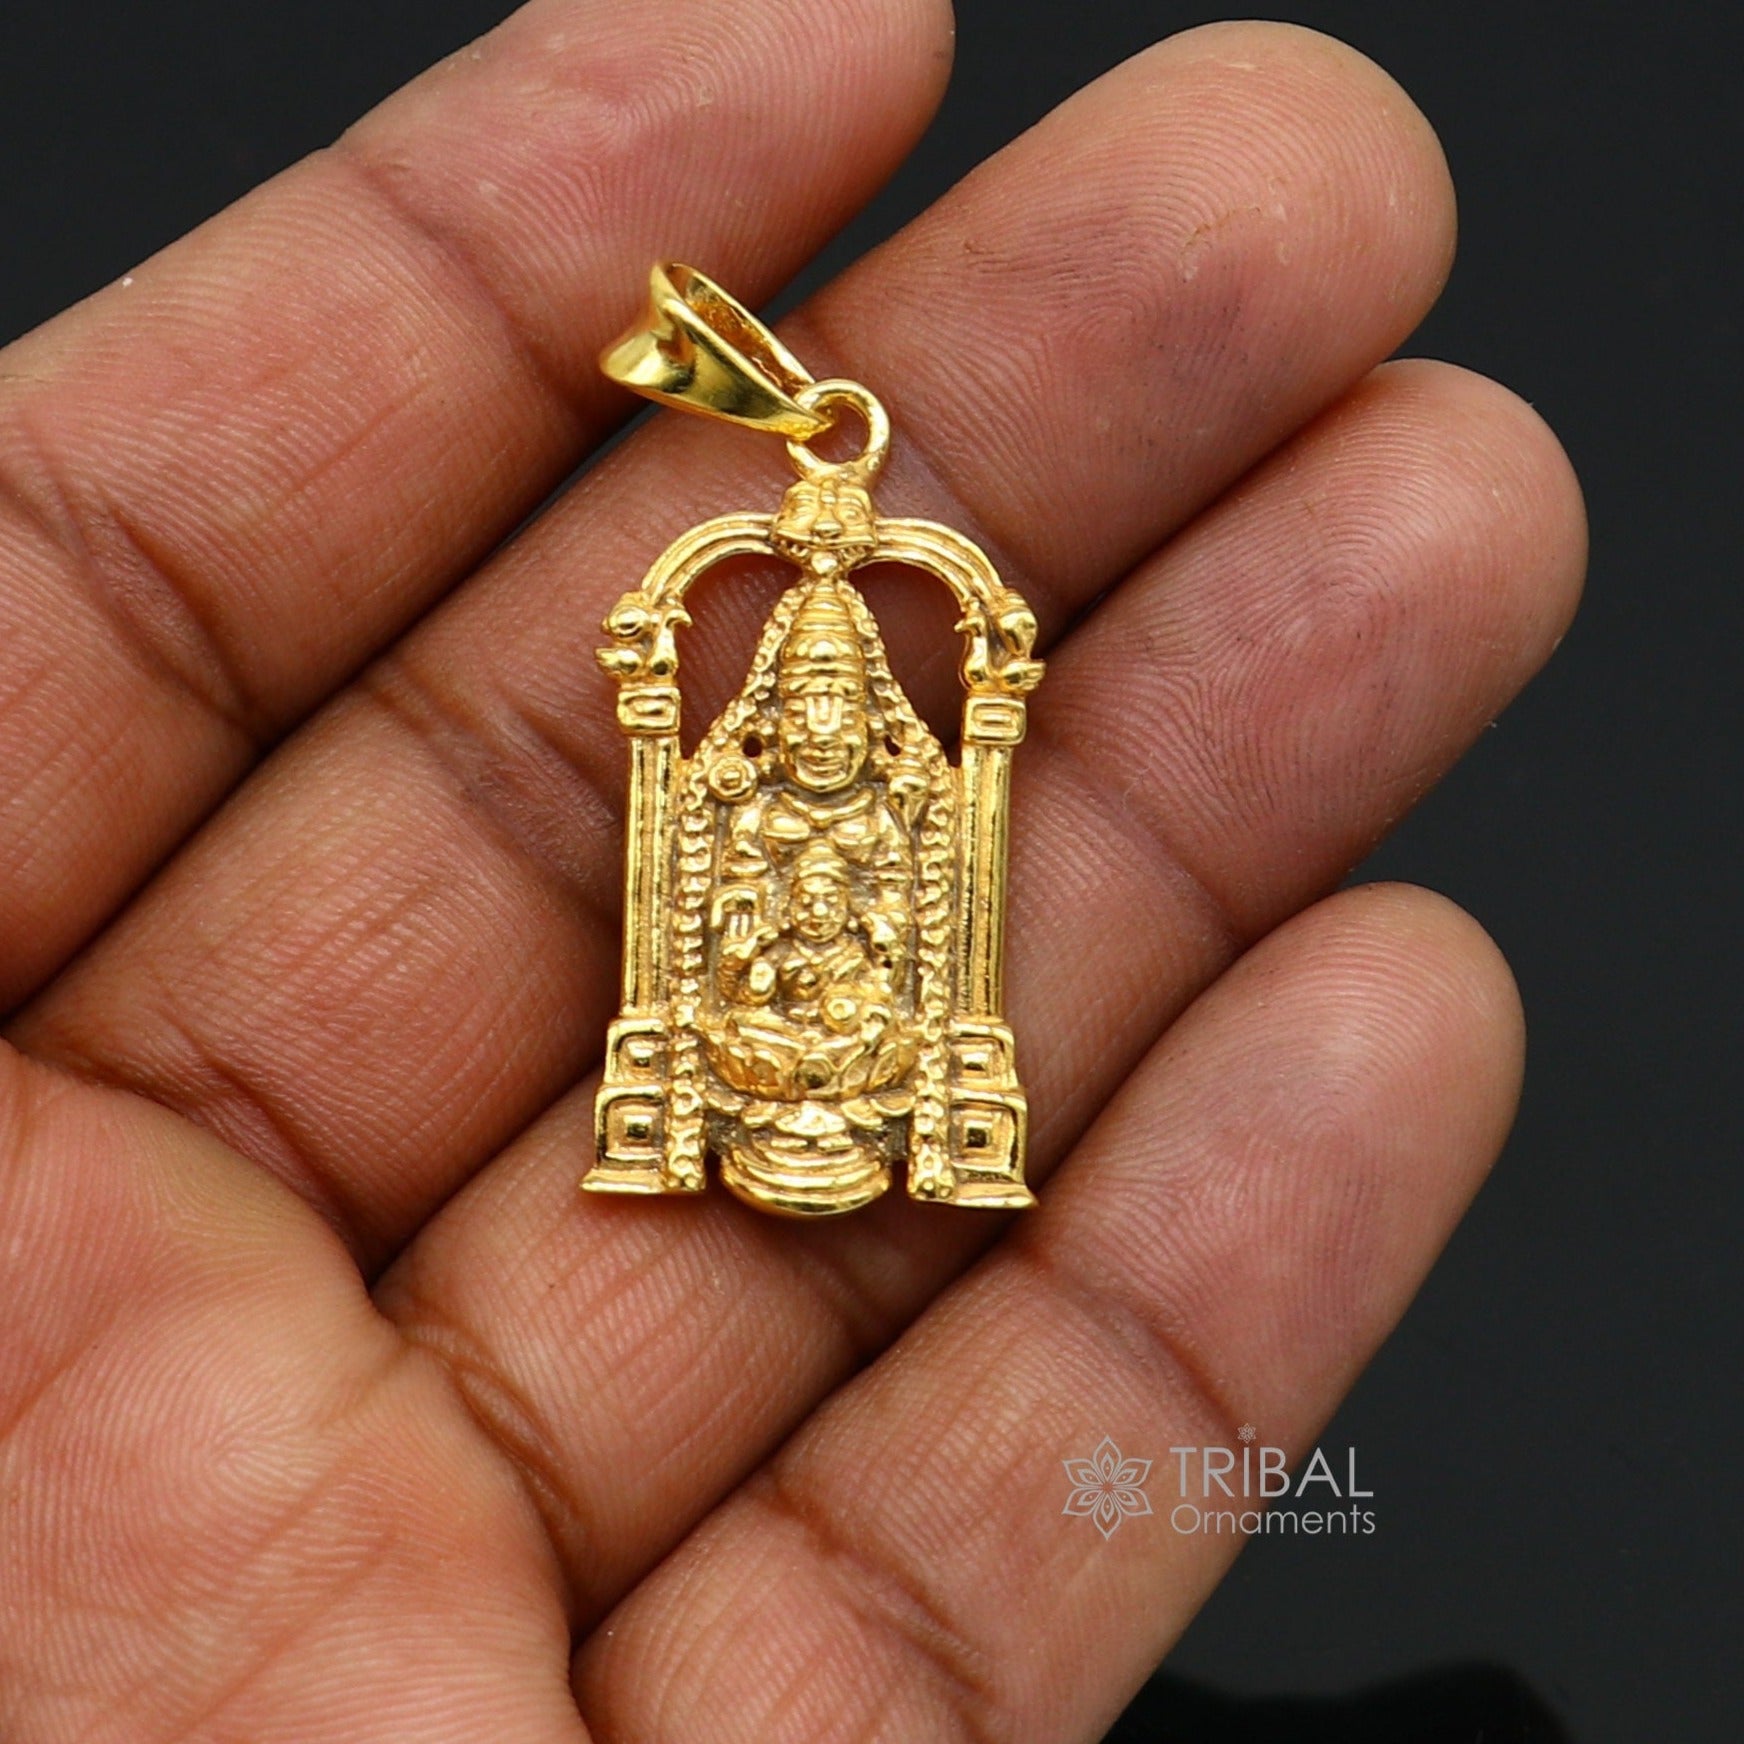 925 sterling silver vintage stylish idol Tirupati Balaji and Laxmi Pendant Narayanan gold polished pendant gifting jewelry nsp616 - TRIBAL ORNAMENTS